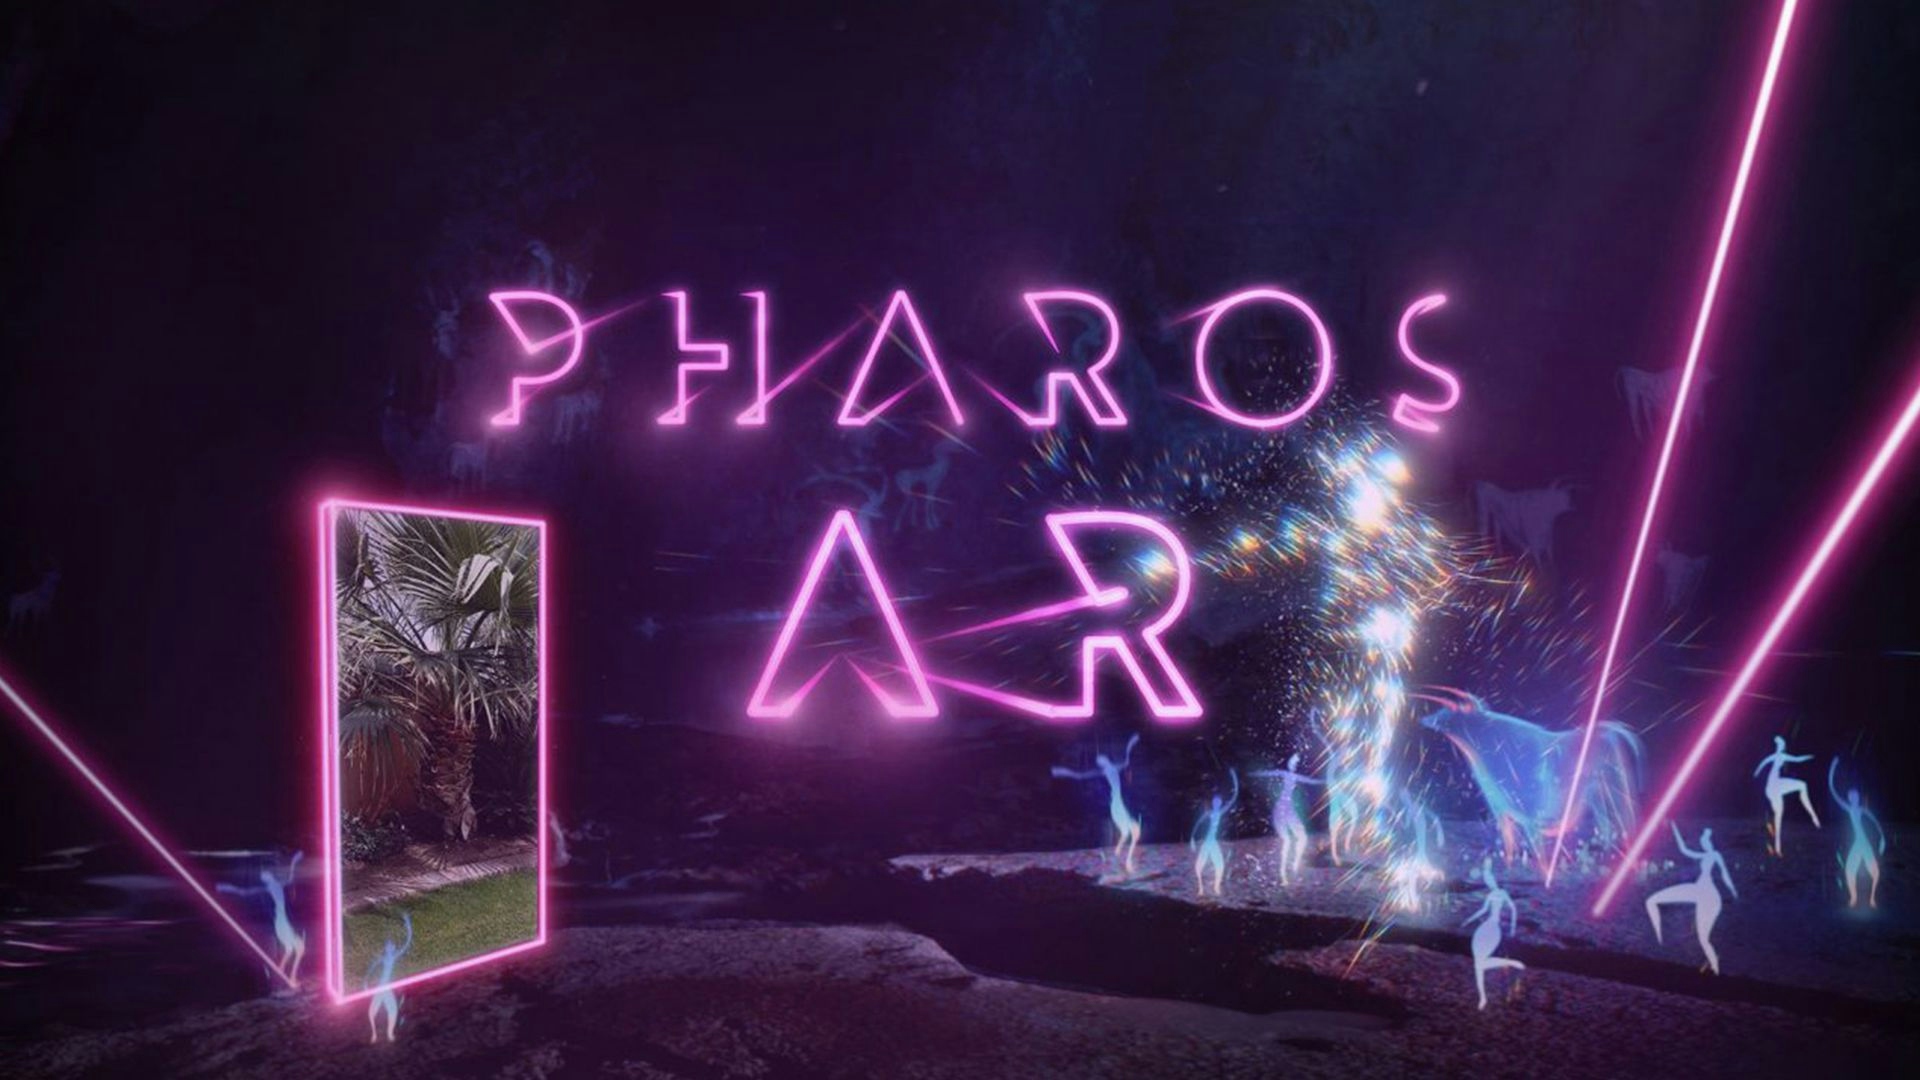 Pharos AR, Made with Unity